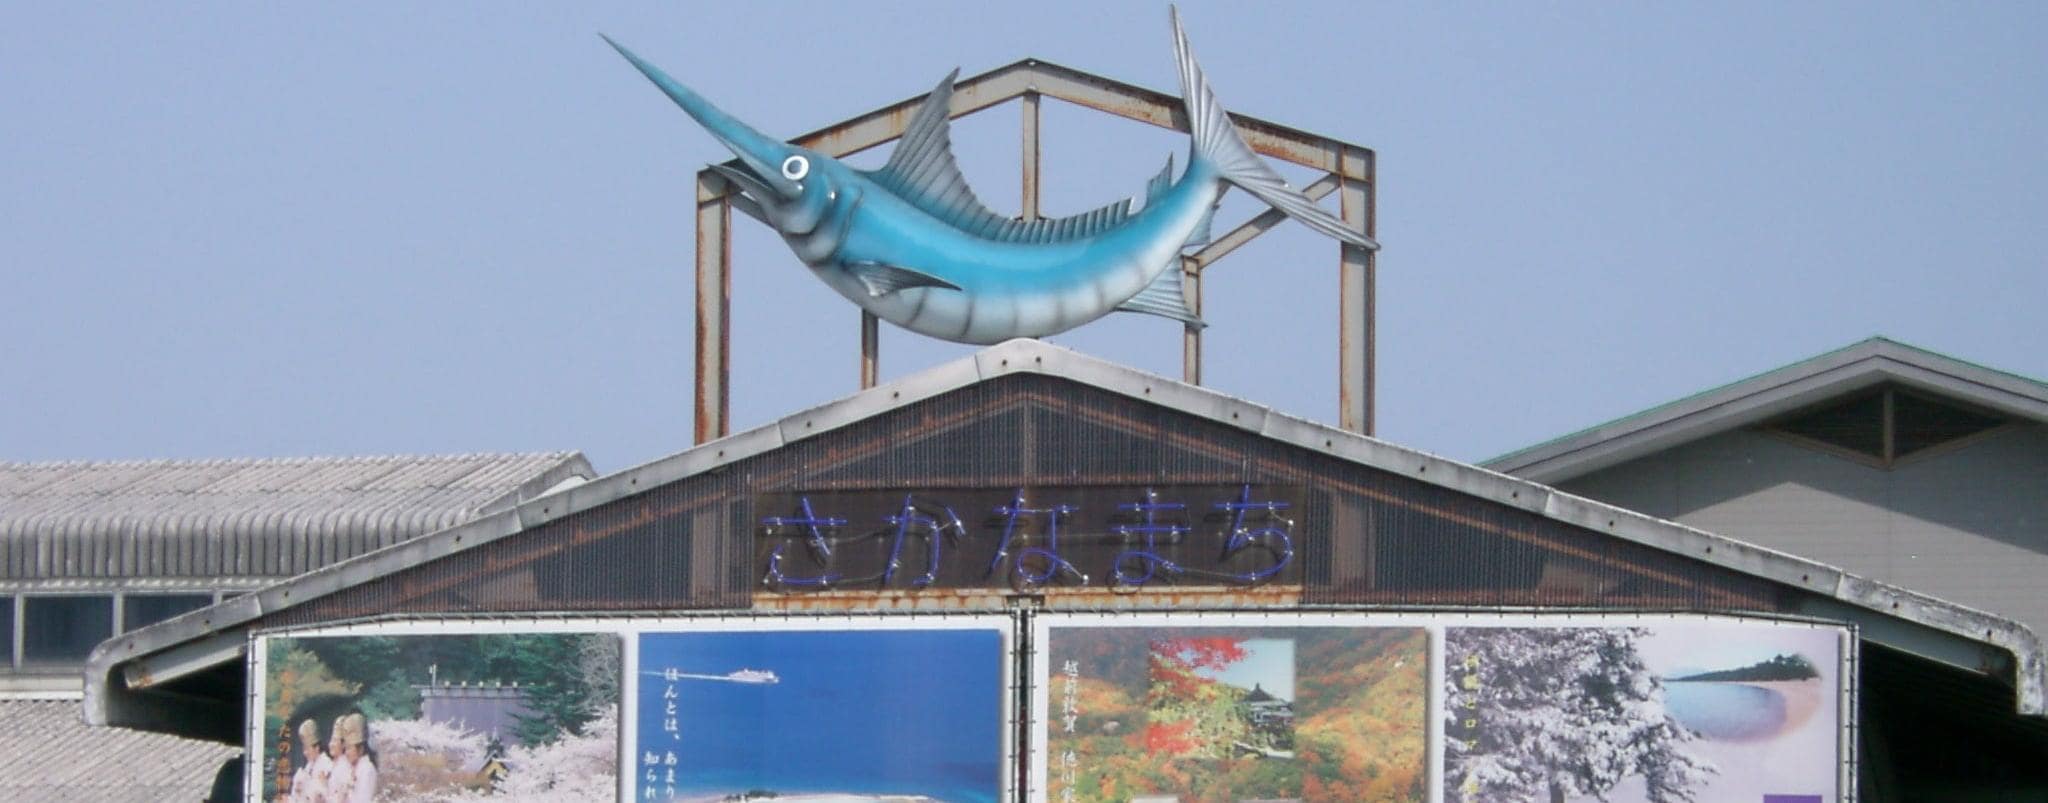 Sea of Japan Fish Market or Nihonkai Sakana Machi